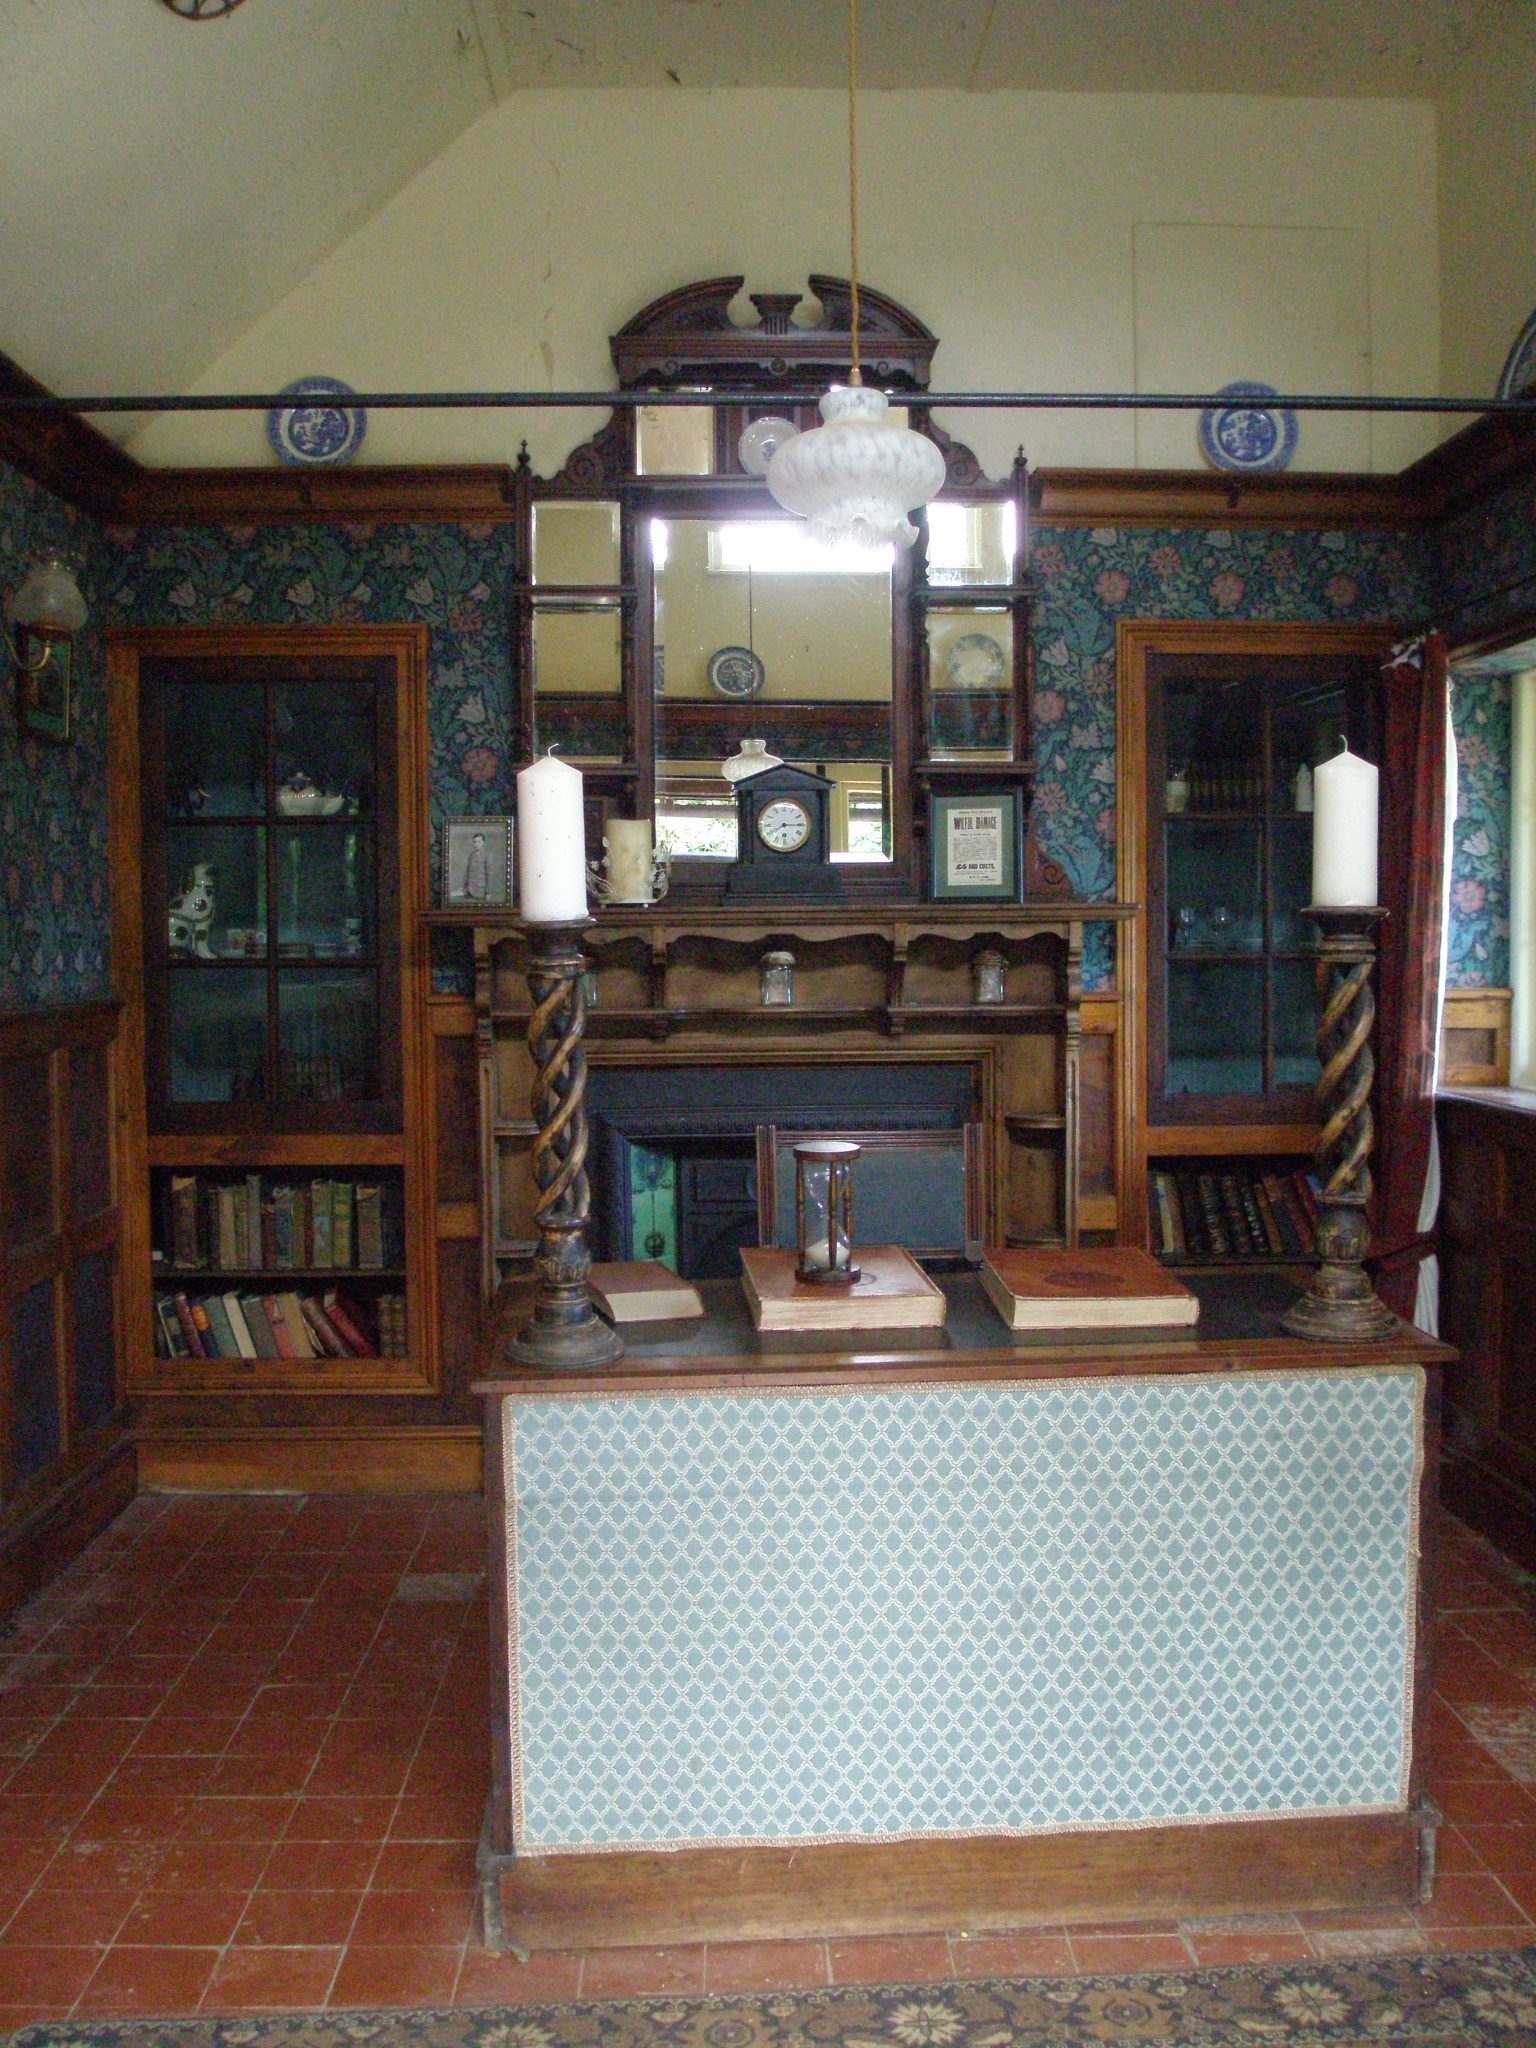 The Arthur Conan Doyle Museum at Groombridge Place